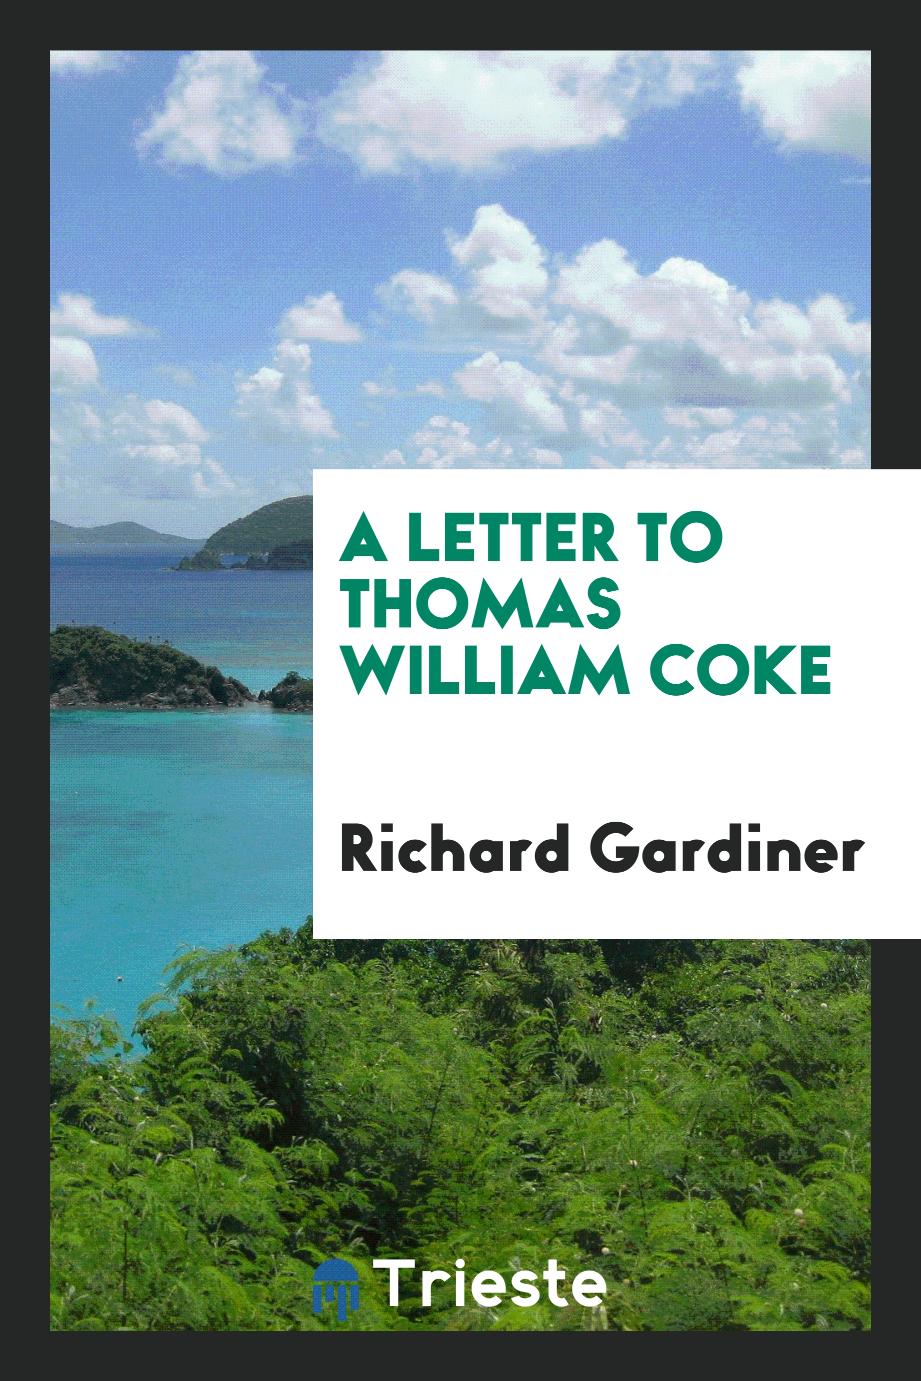 A letter to Thomas William Coke